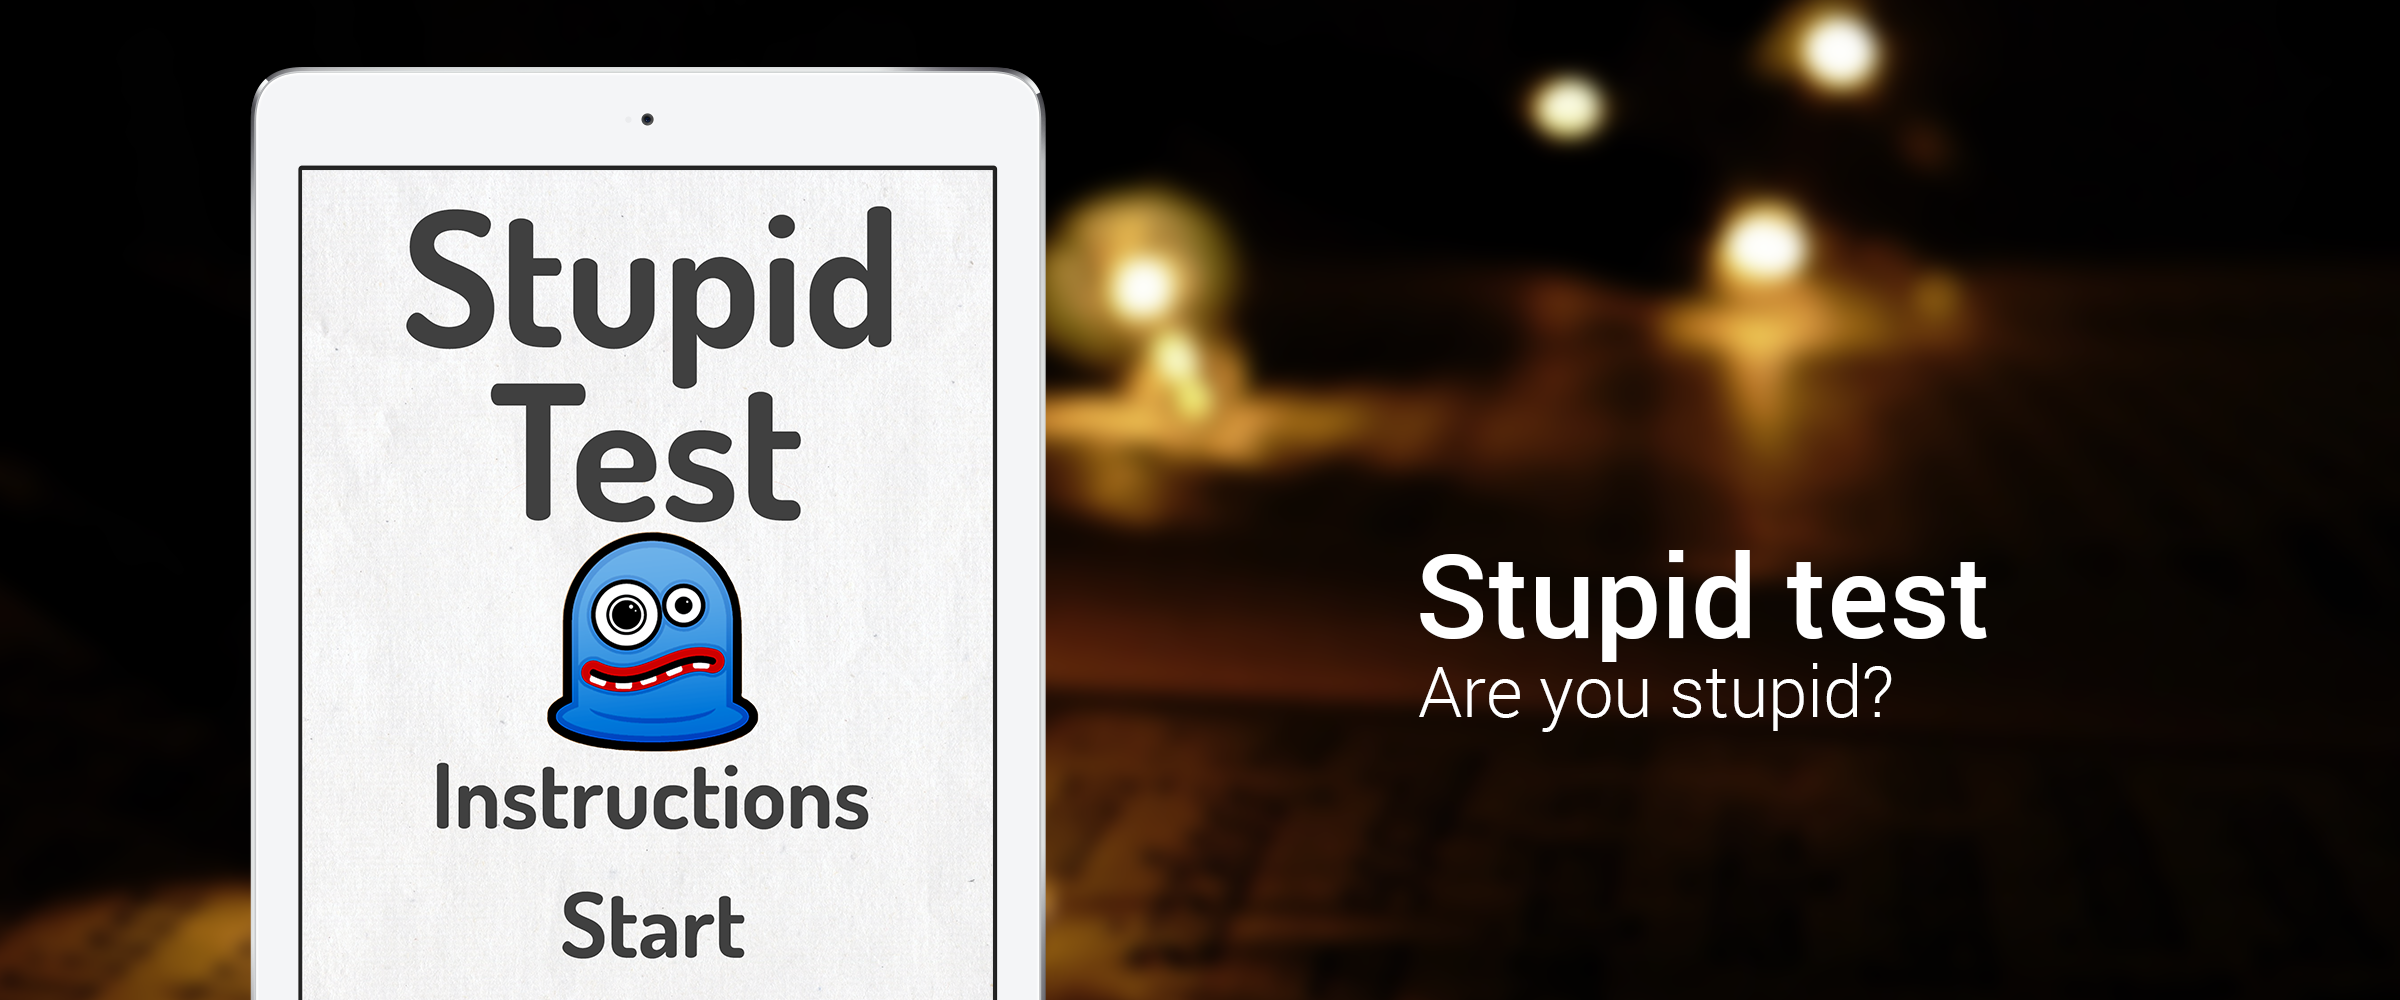 Stupid Test - appdesignworx.com - 2400 x 1000 png 1398kB